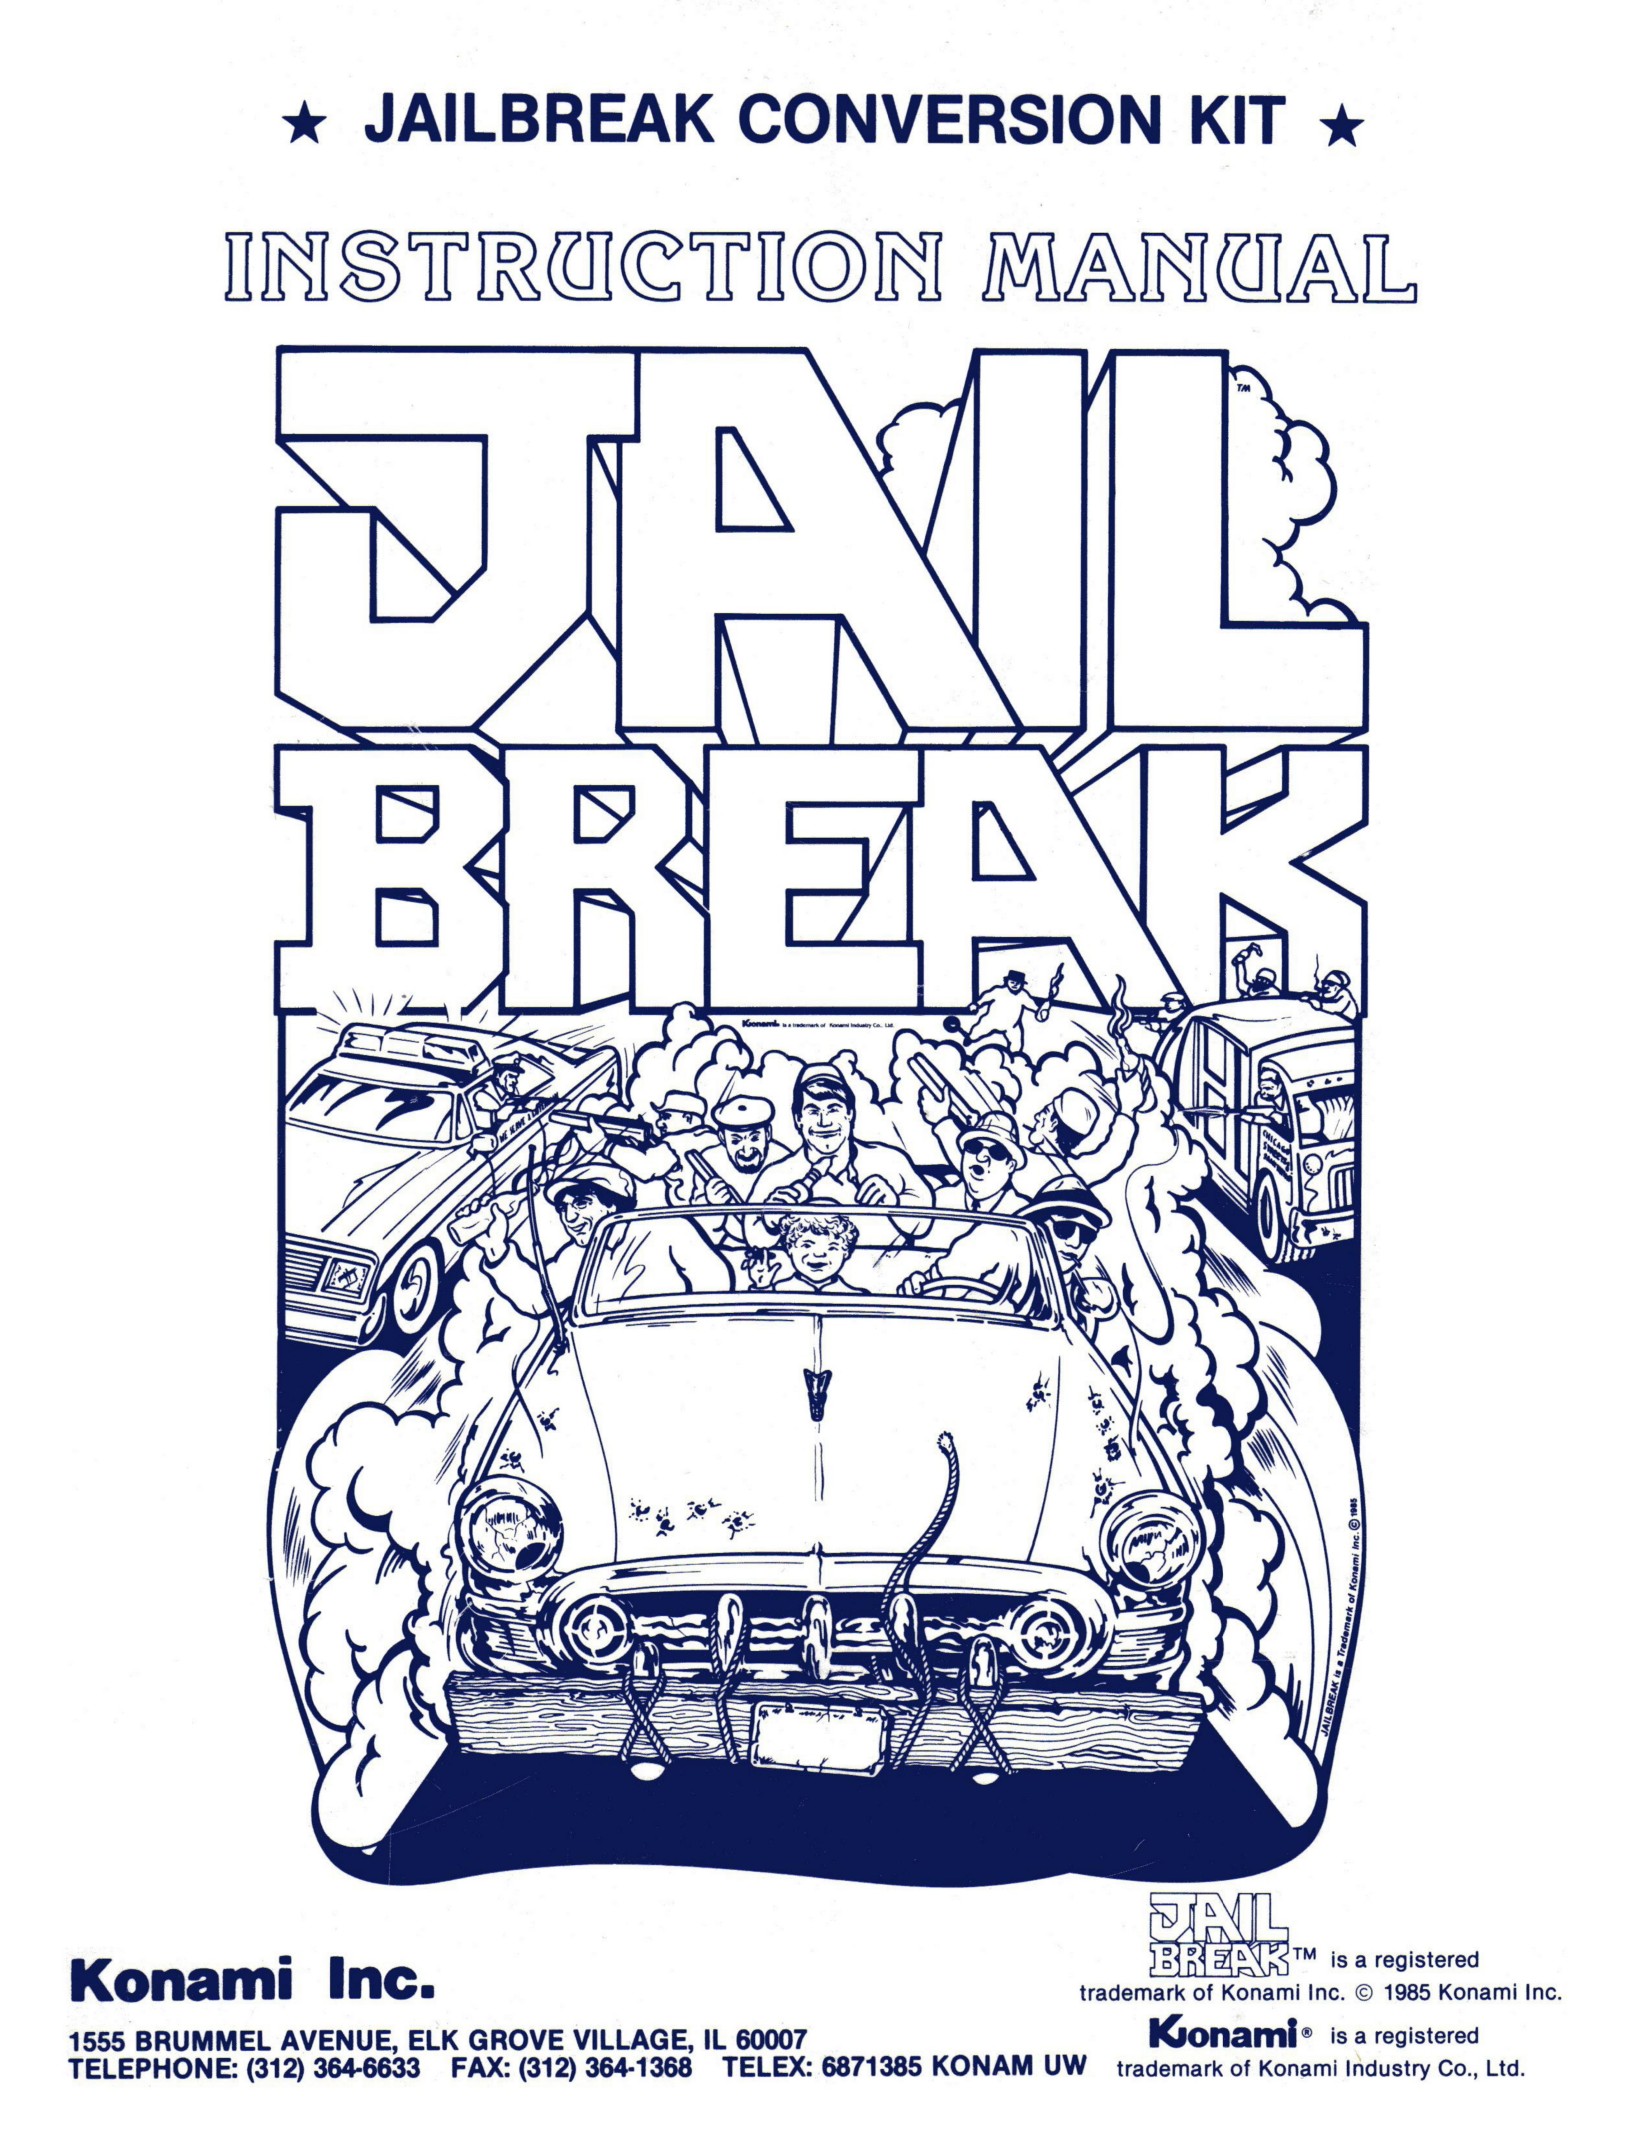 Jail Break Conversion Kit Instruction Manual